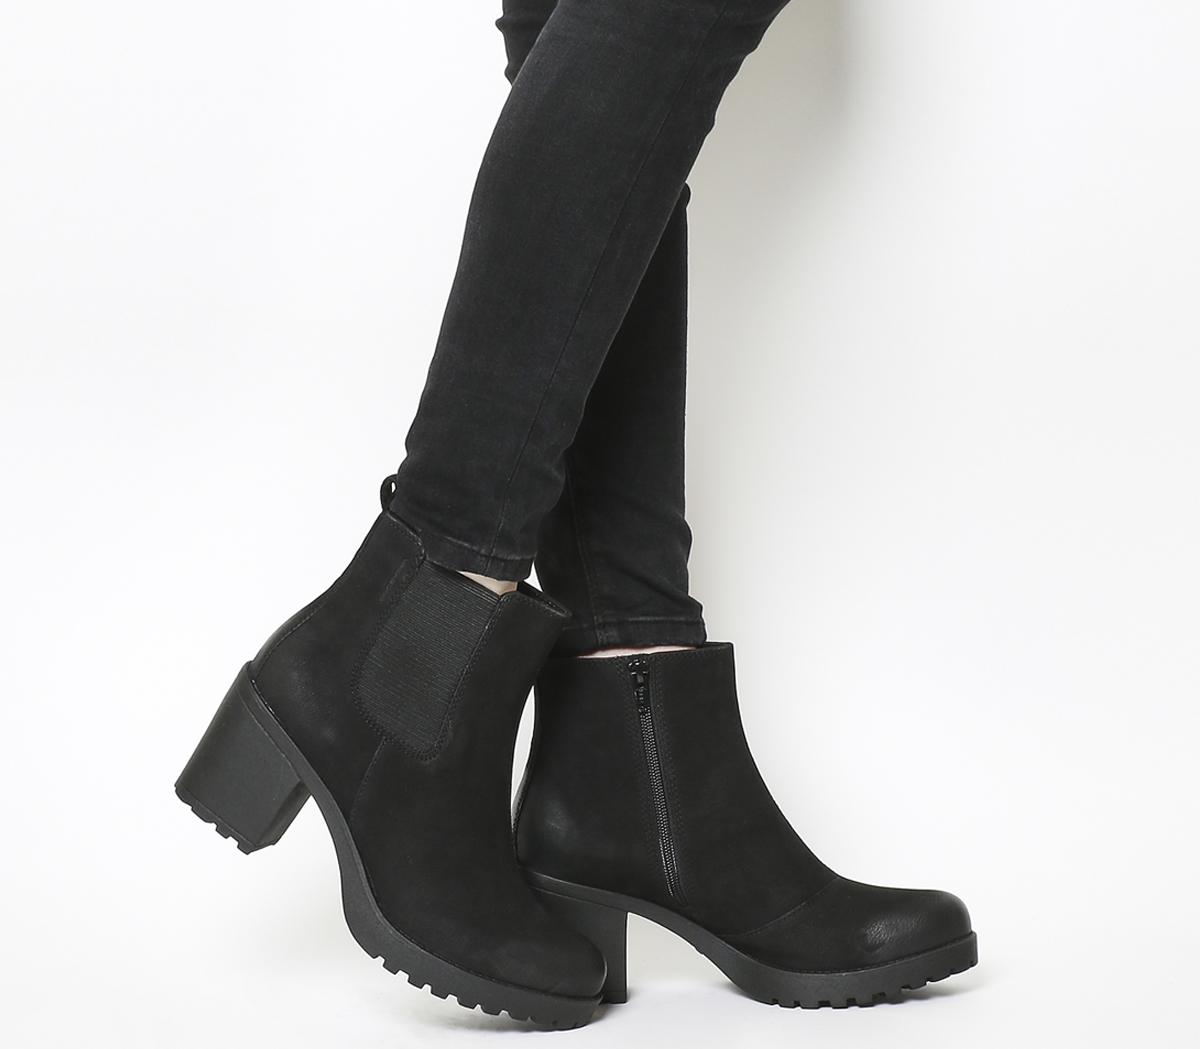 Grace Heeled Chelsea Boots Black Nubuck - Women's Ankle